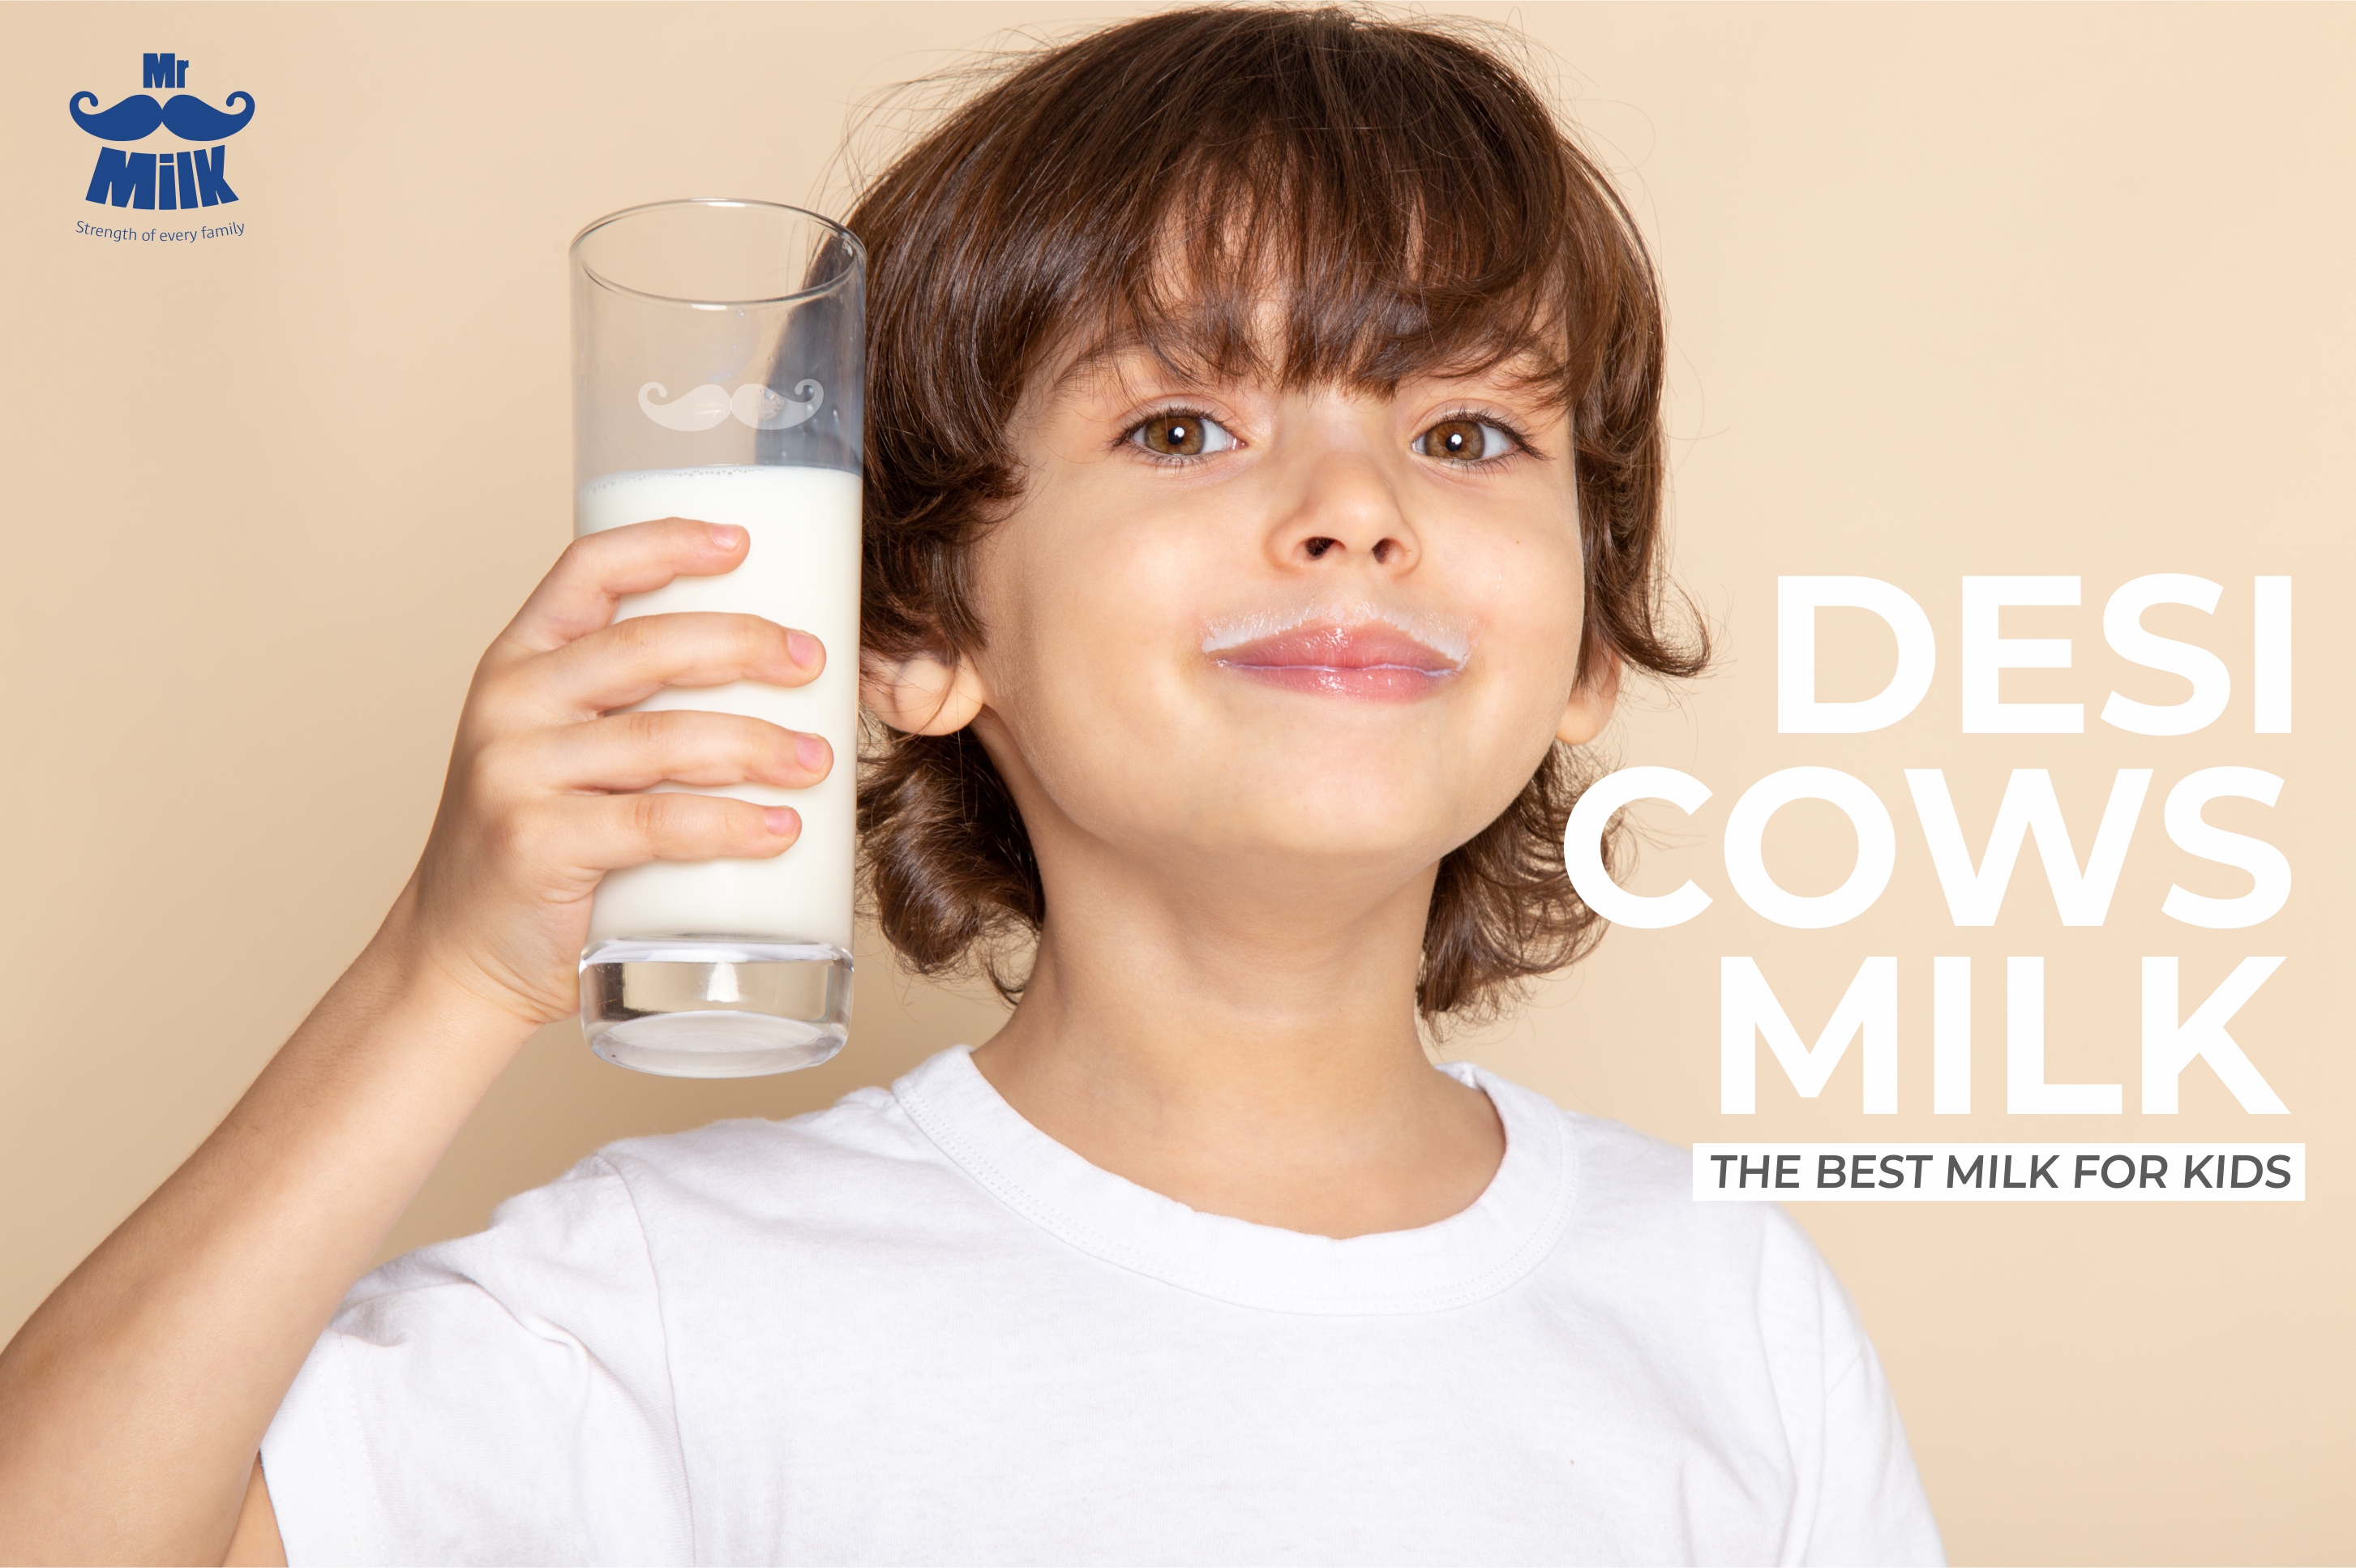 Desi cows milk – the best milk for kids